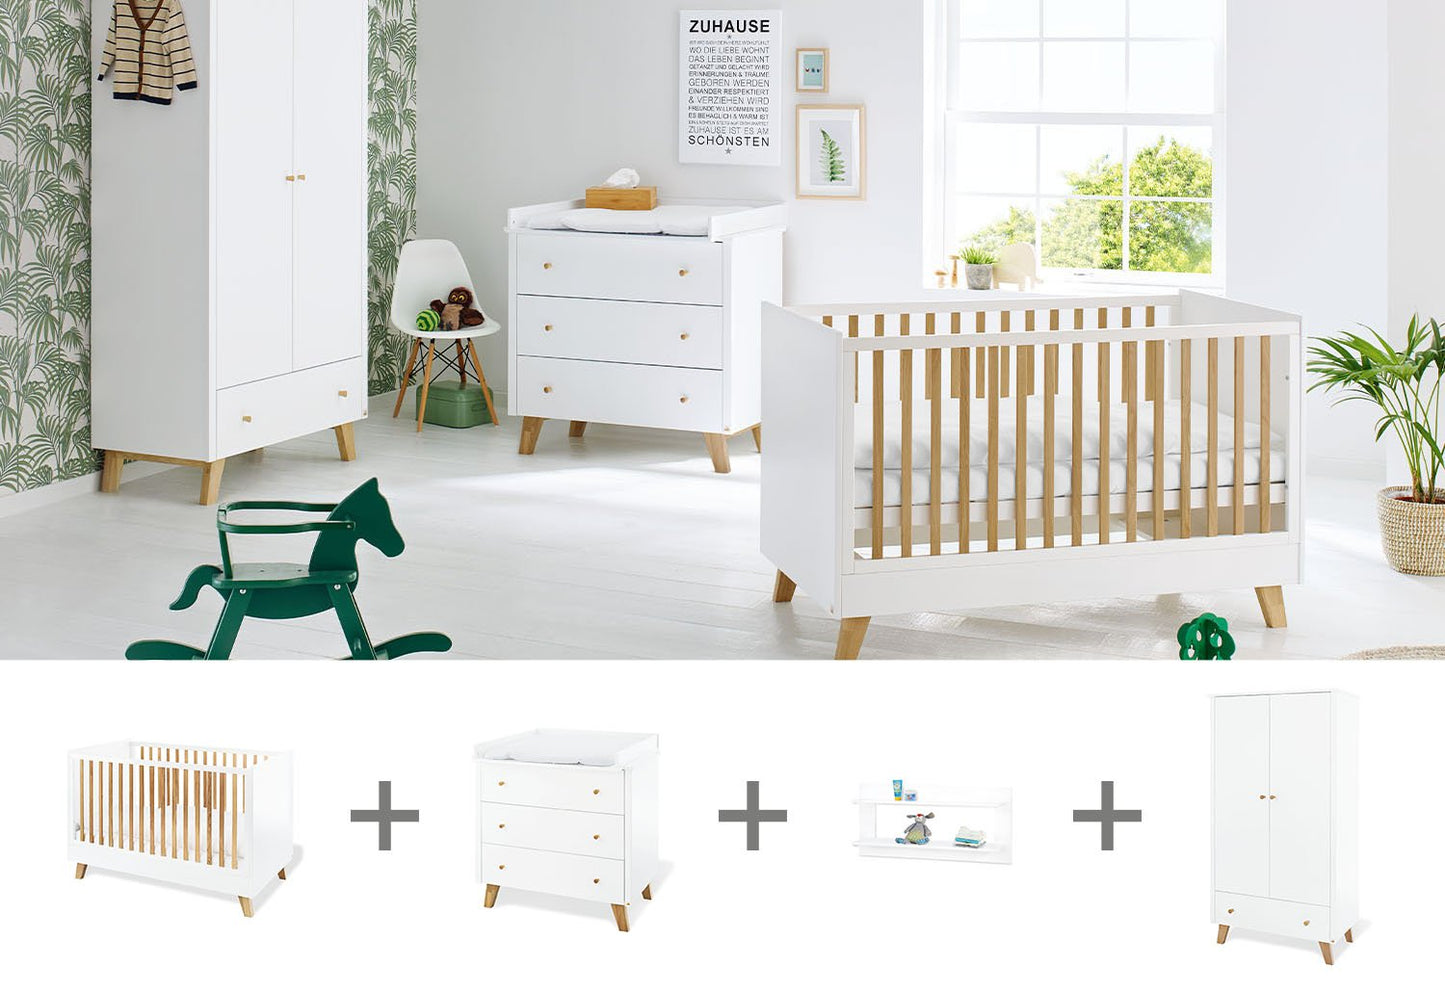 Nursery 'Pan' wide, incl. wall shelf
4 parts: cot bed, wide changing unit, 2-door wardrobe, wall shelf